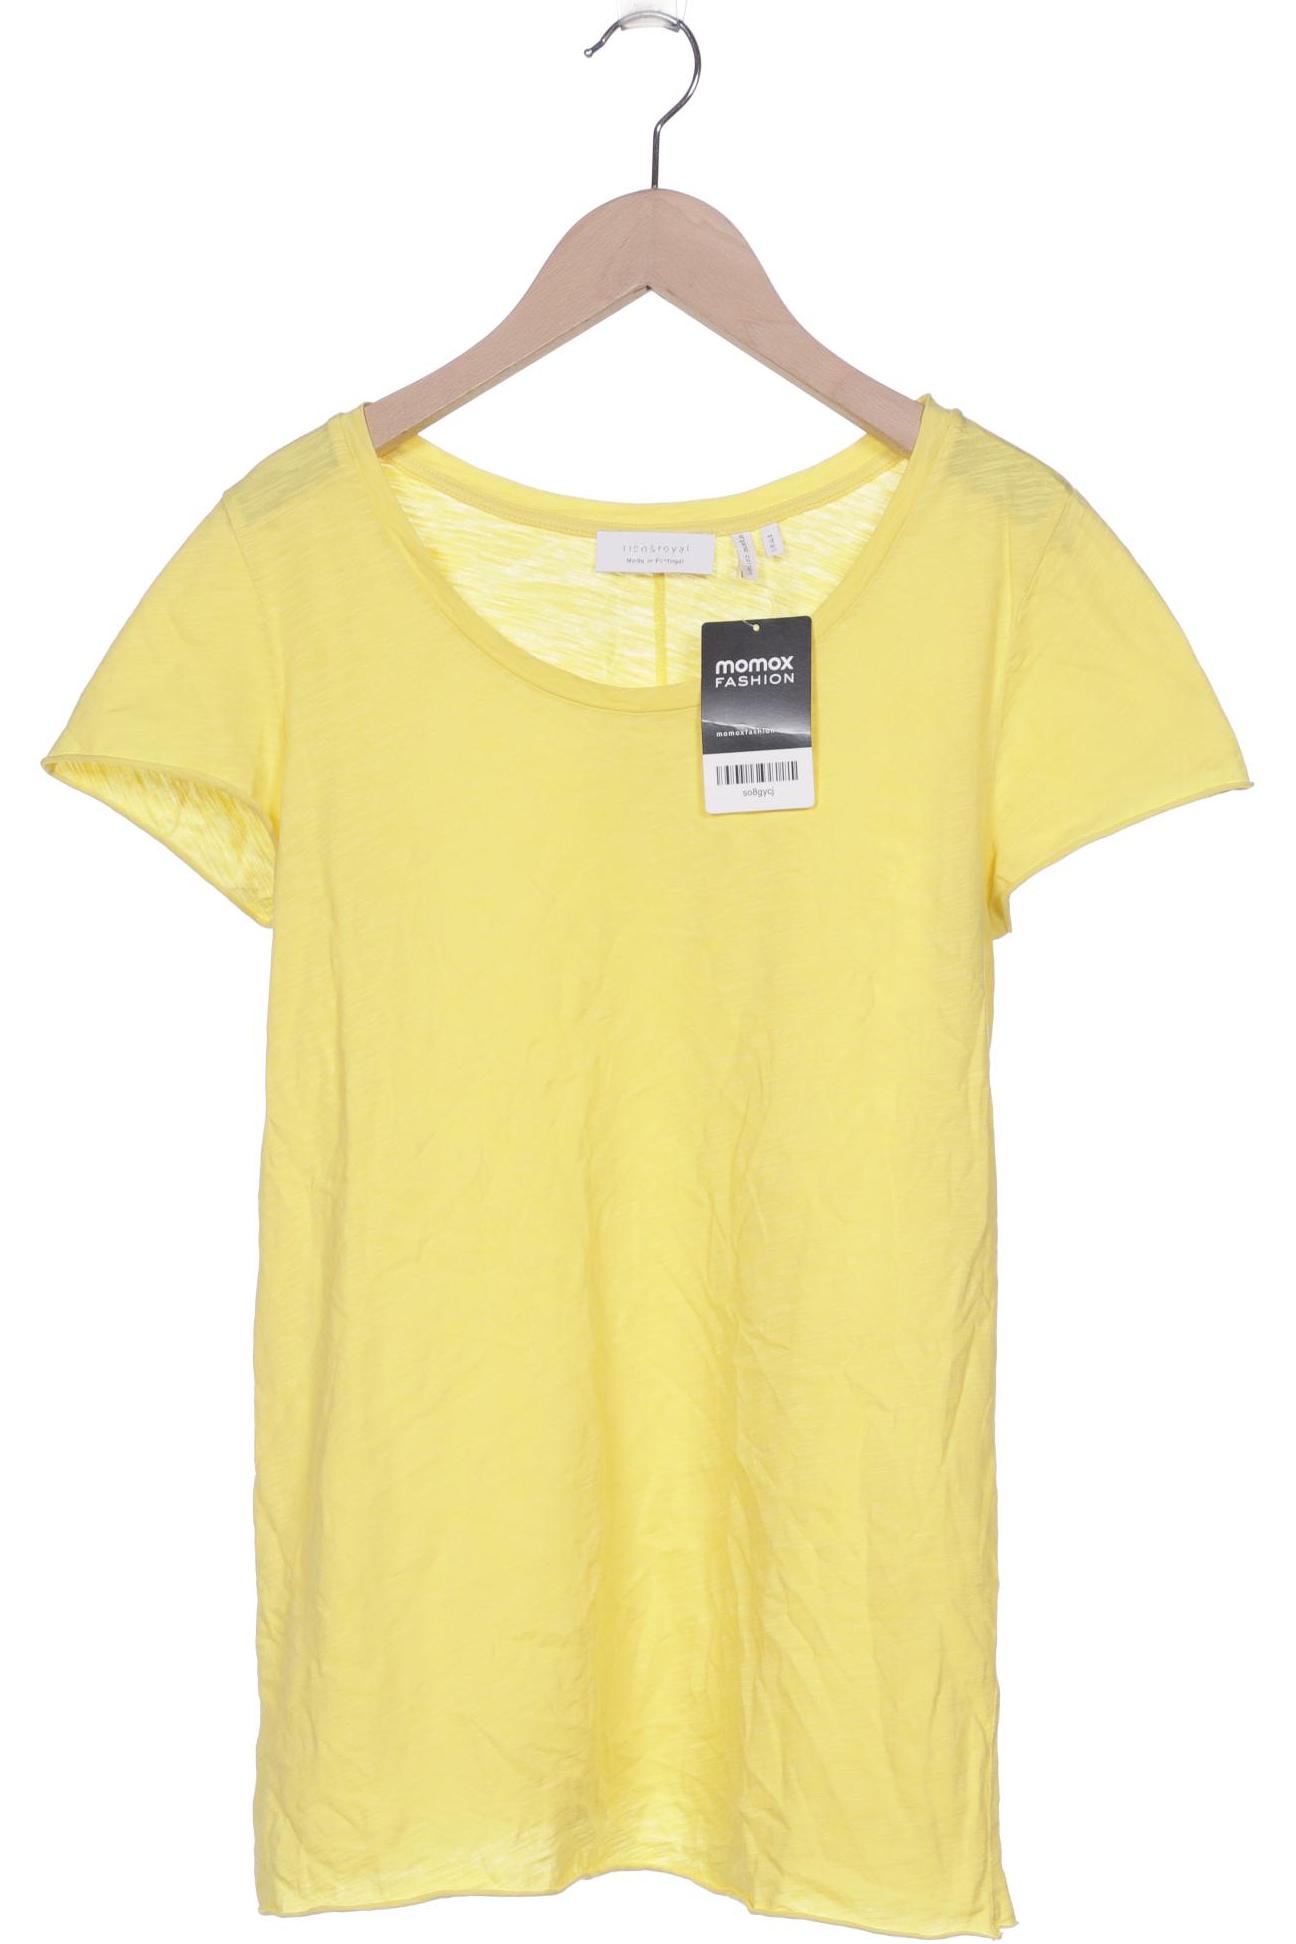 Rich & Royal Damen T-Shirt, gelb von Rich & Royal